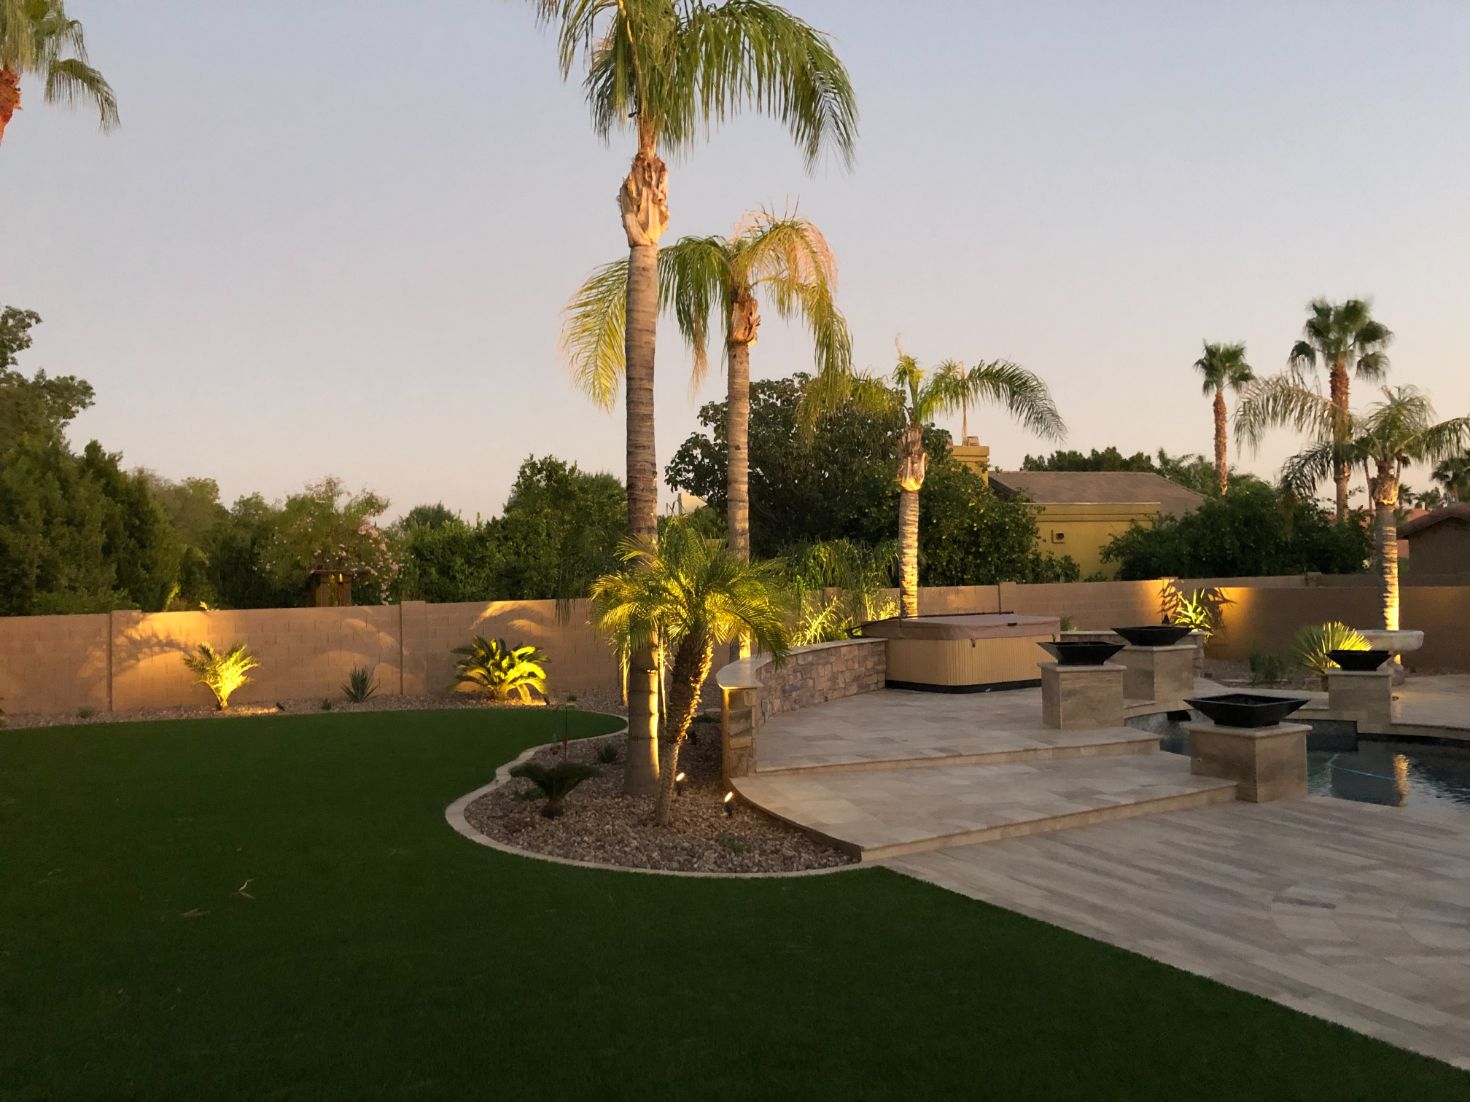 pavers landscaping artificial turf backyard paradise arizona